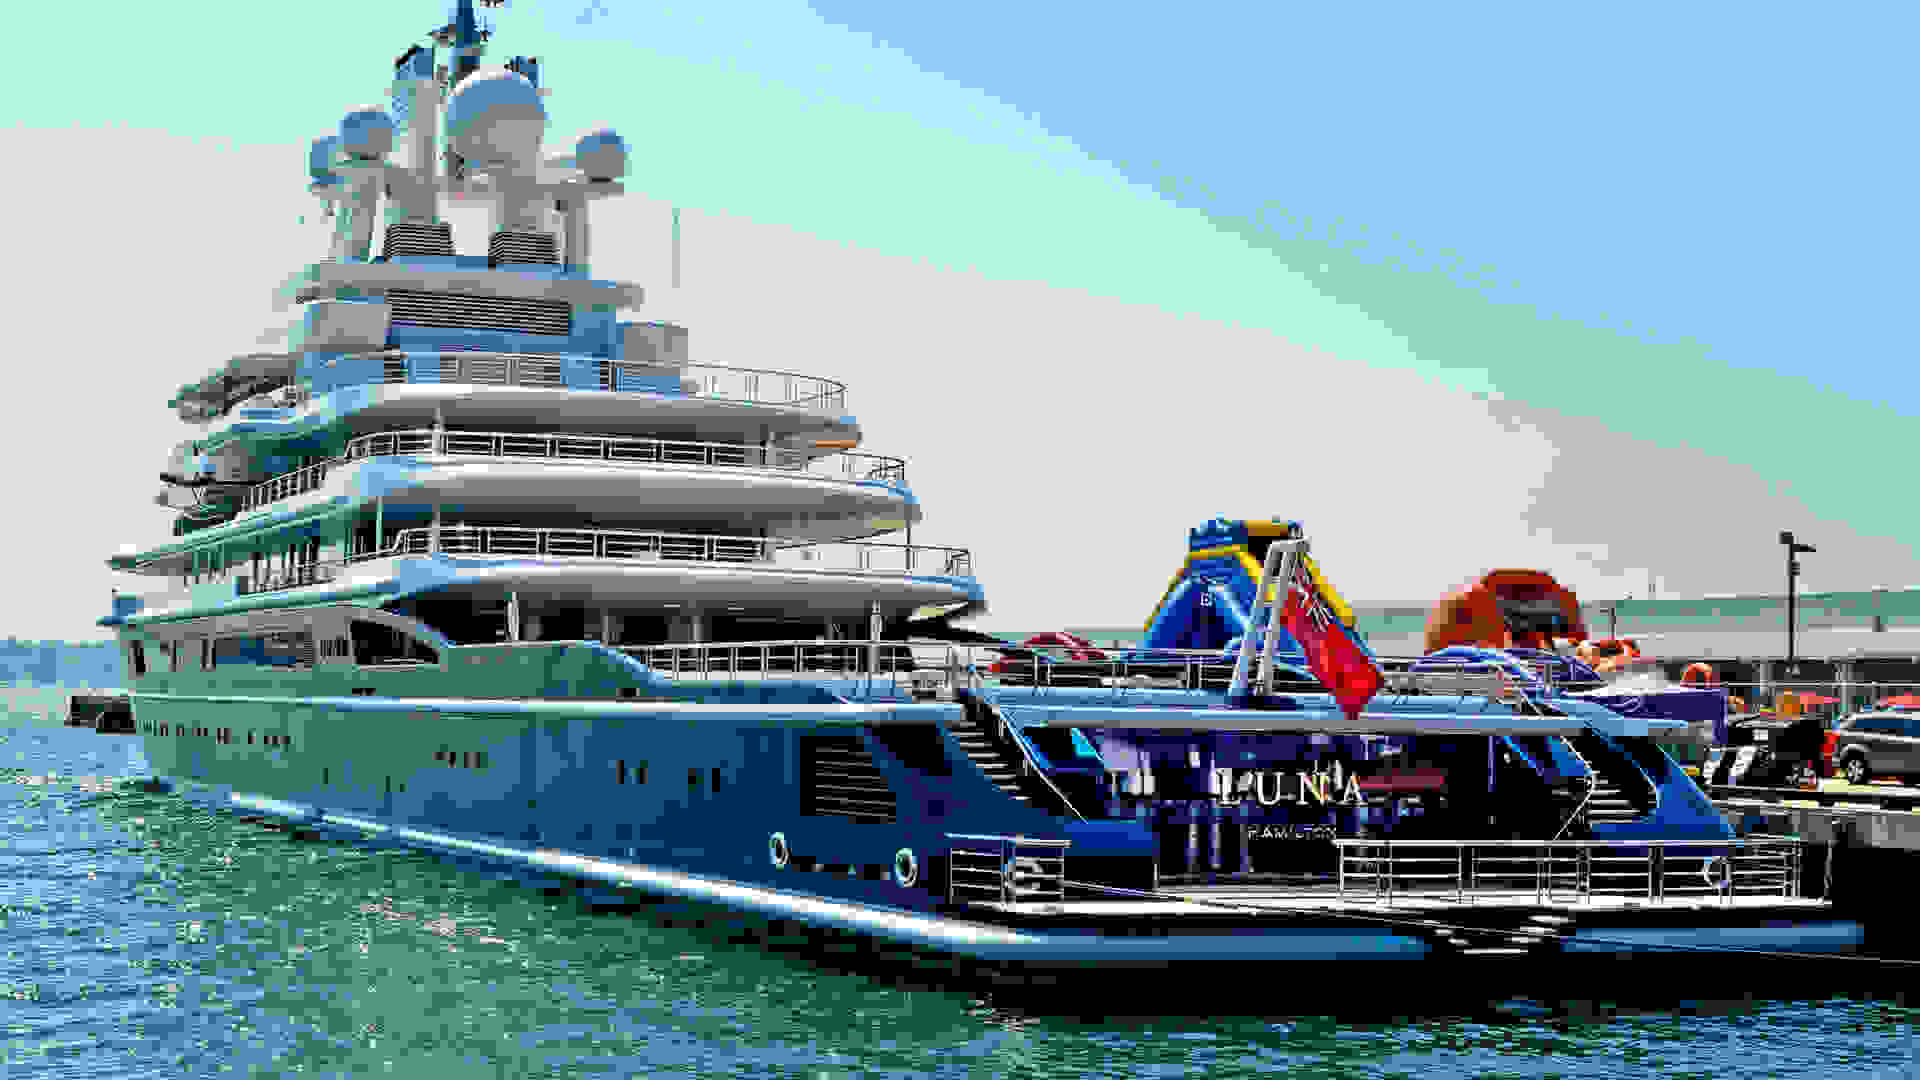 Roman Abramovich’s motor yacht “Luna” docked in San Diego, January 2013 Photo by Sam Morris via Wikipedia (CC-BY-3.0)